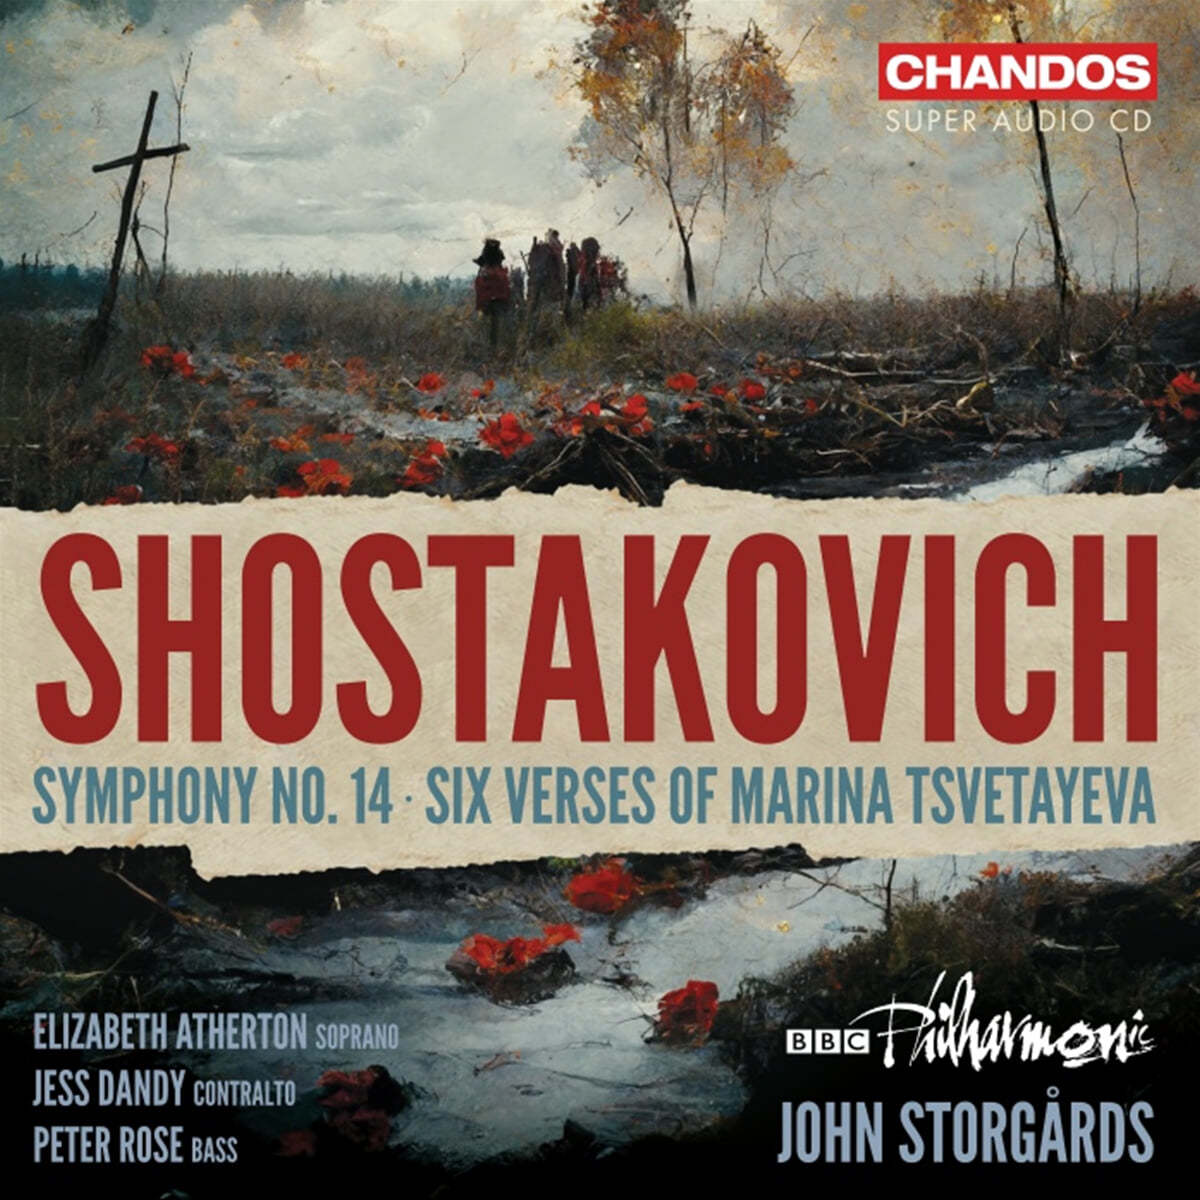 John Storgards 쇼스타코비치: 교향곡 14번, 마리나 츠베타예바의 6개의 시 (Shostakovich: Symphony No.14, Six Verses Of Marina Tsvetayeva)